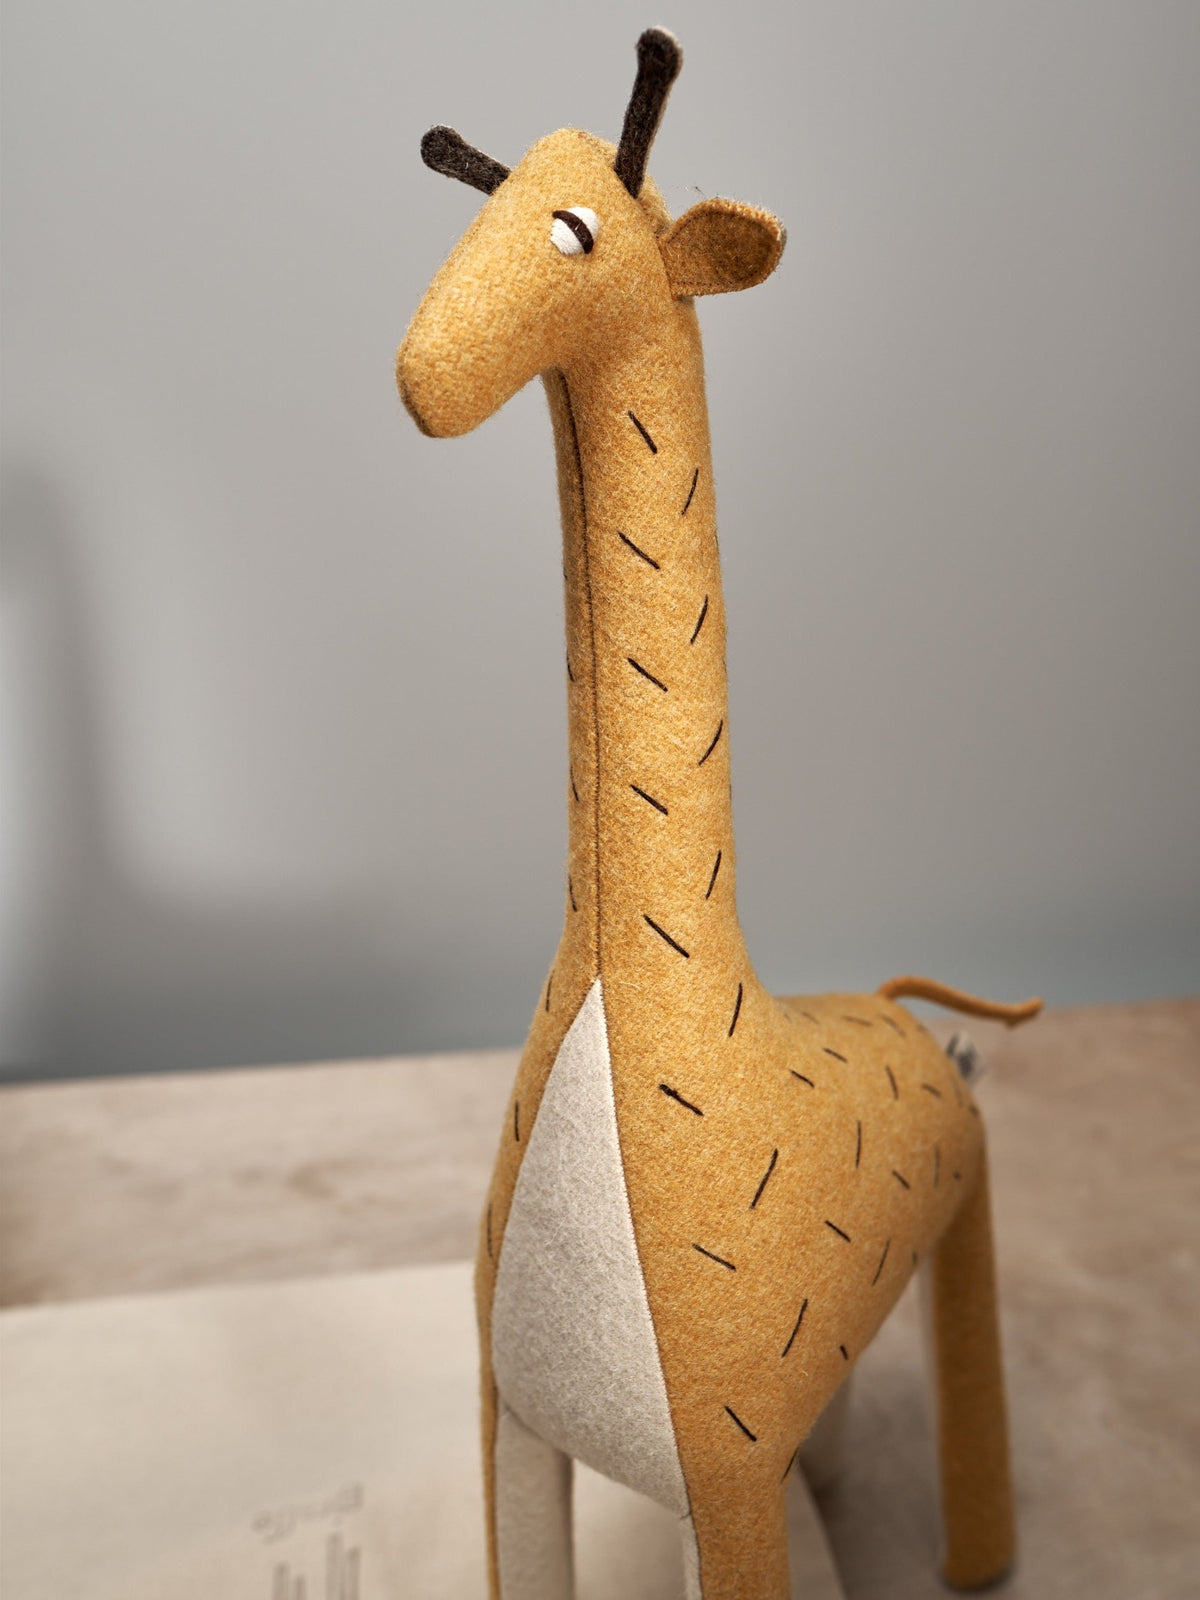 A ZIFFA, the Nubian giraffe toy on a table. (Brand Name: Carapau)